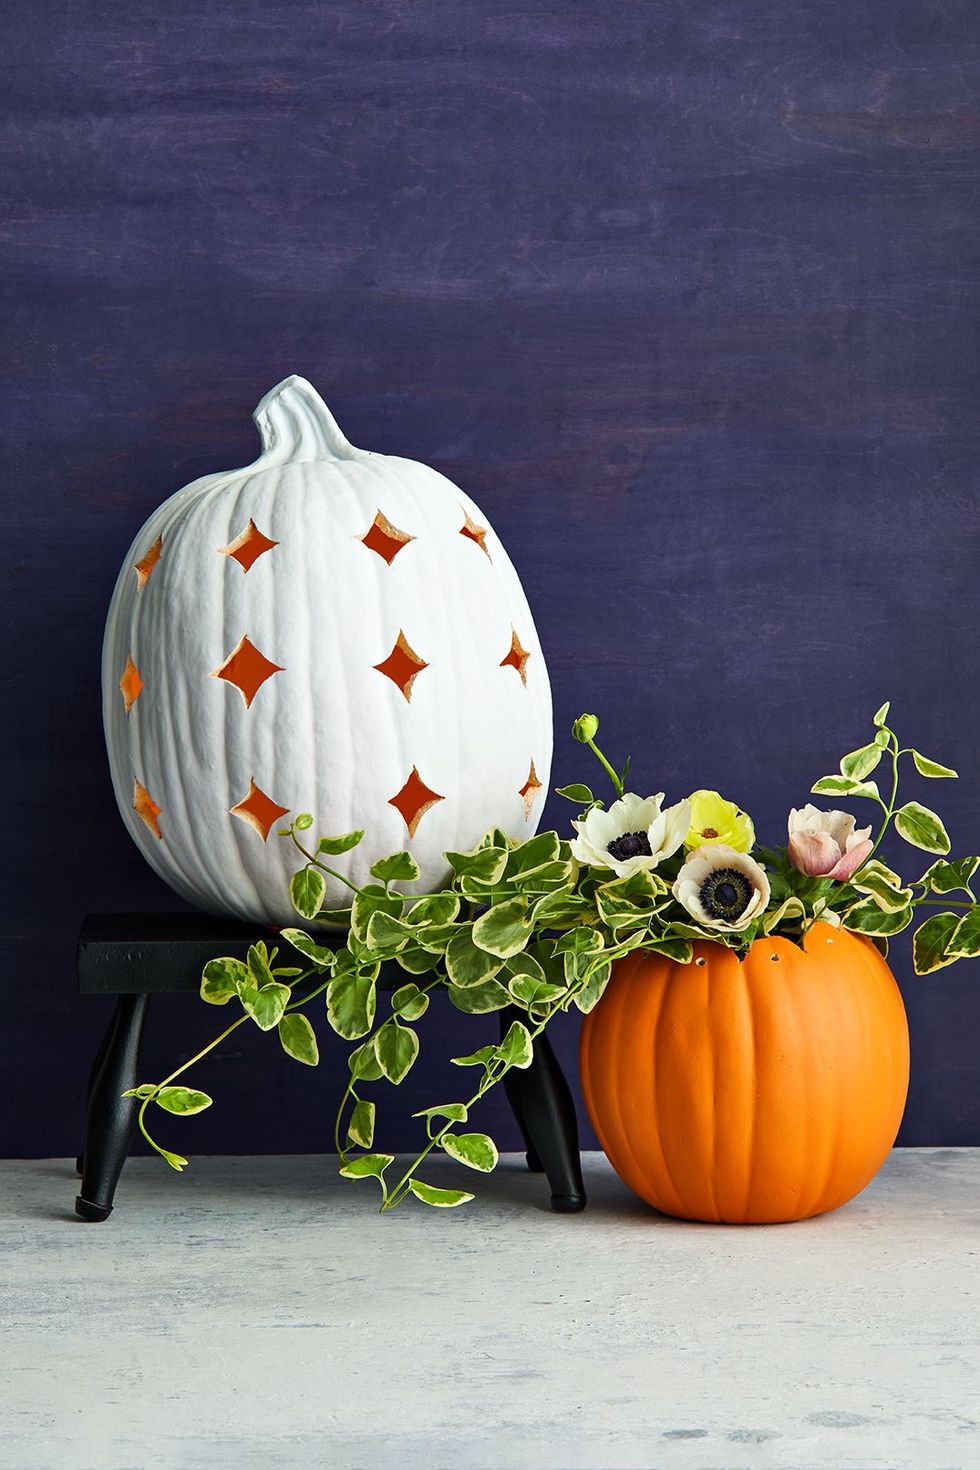 diy outdoor halloween decorations cutout pumpkin and trailing stems